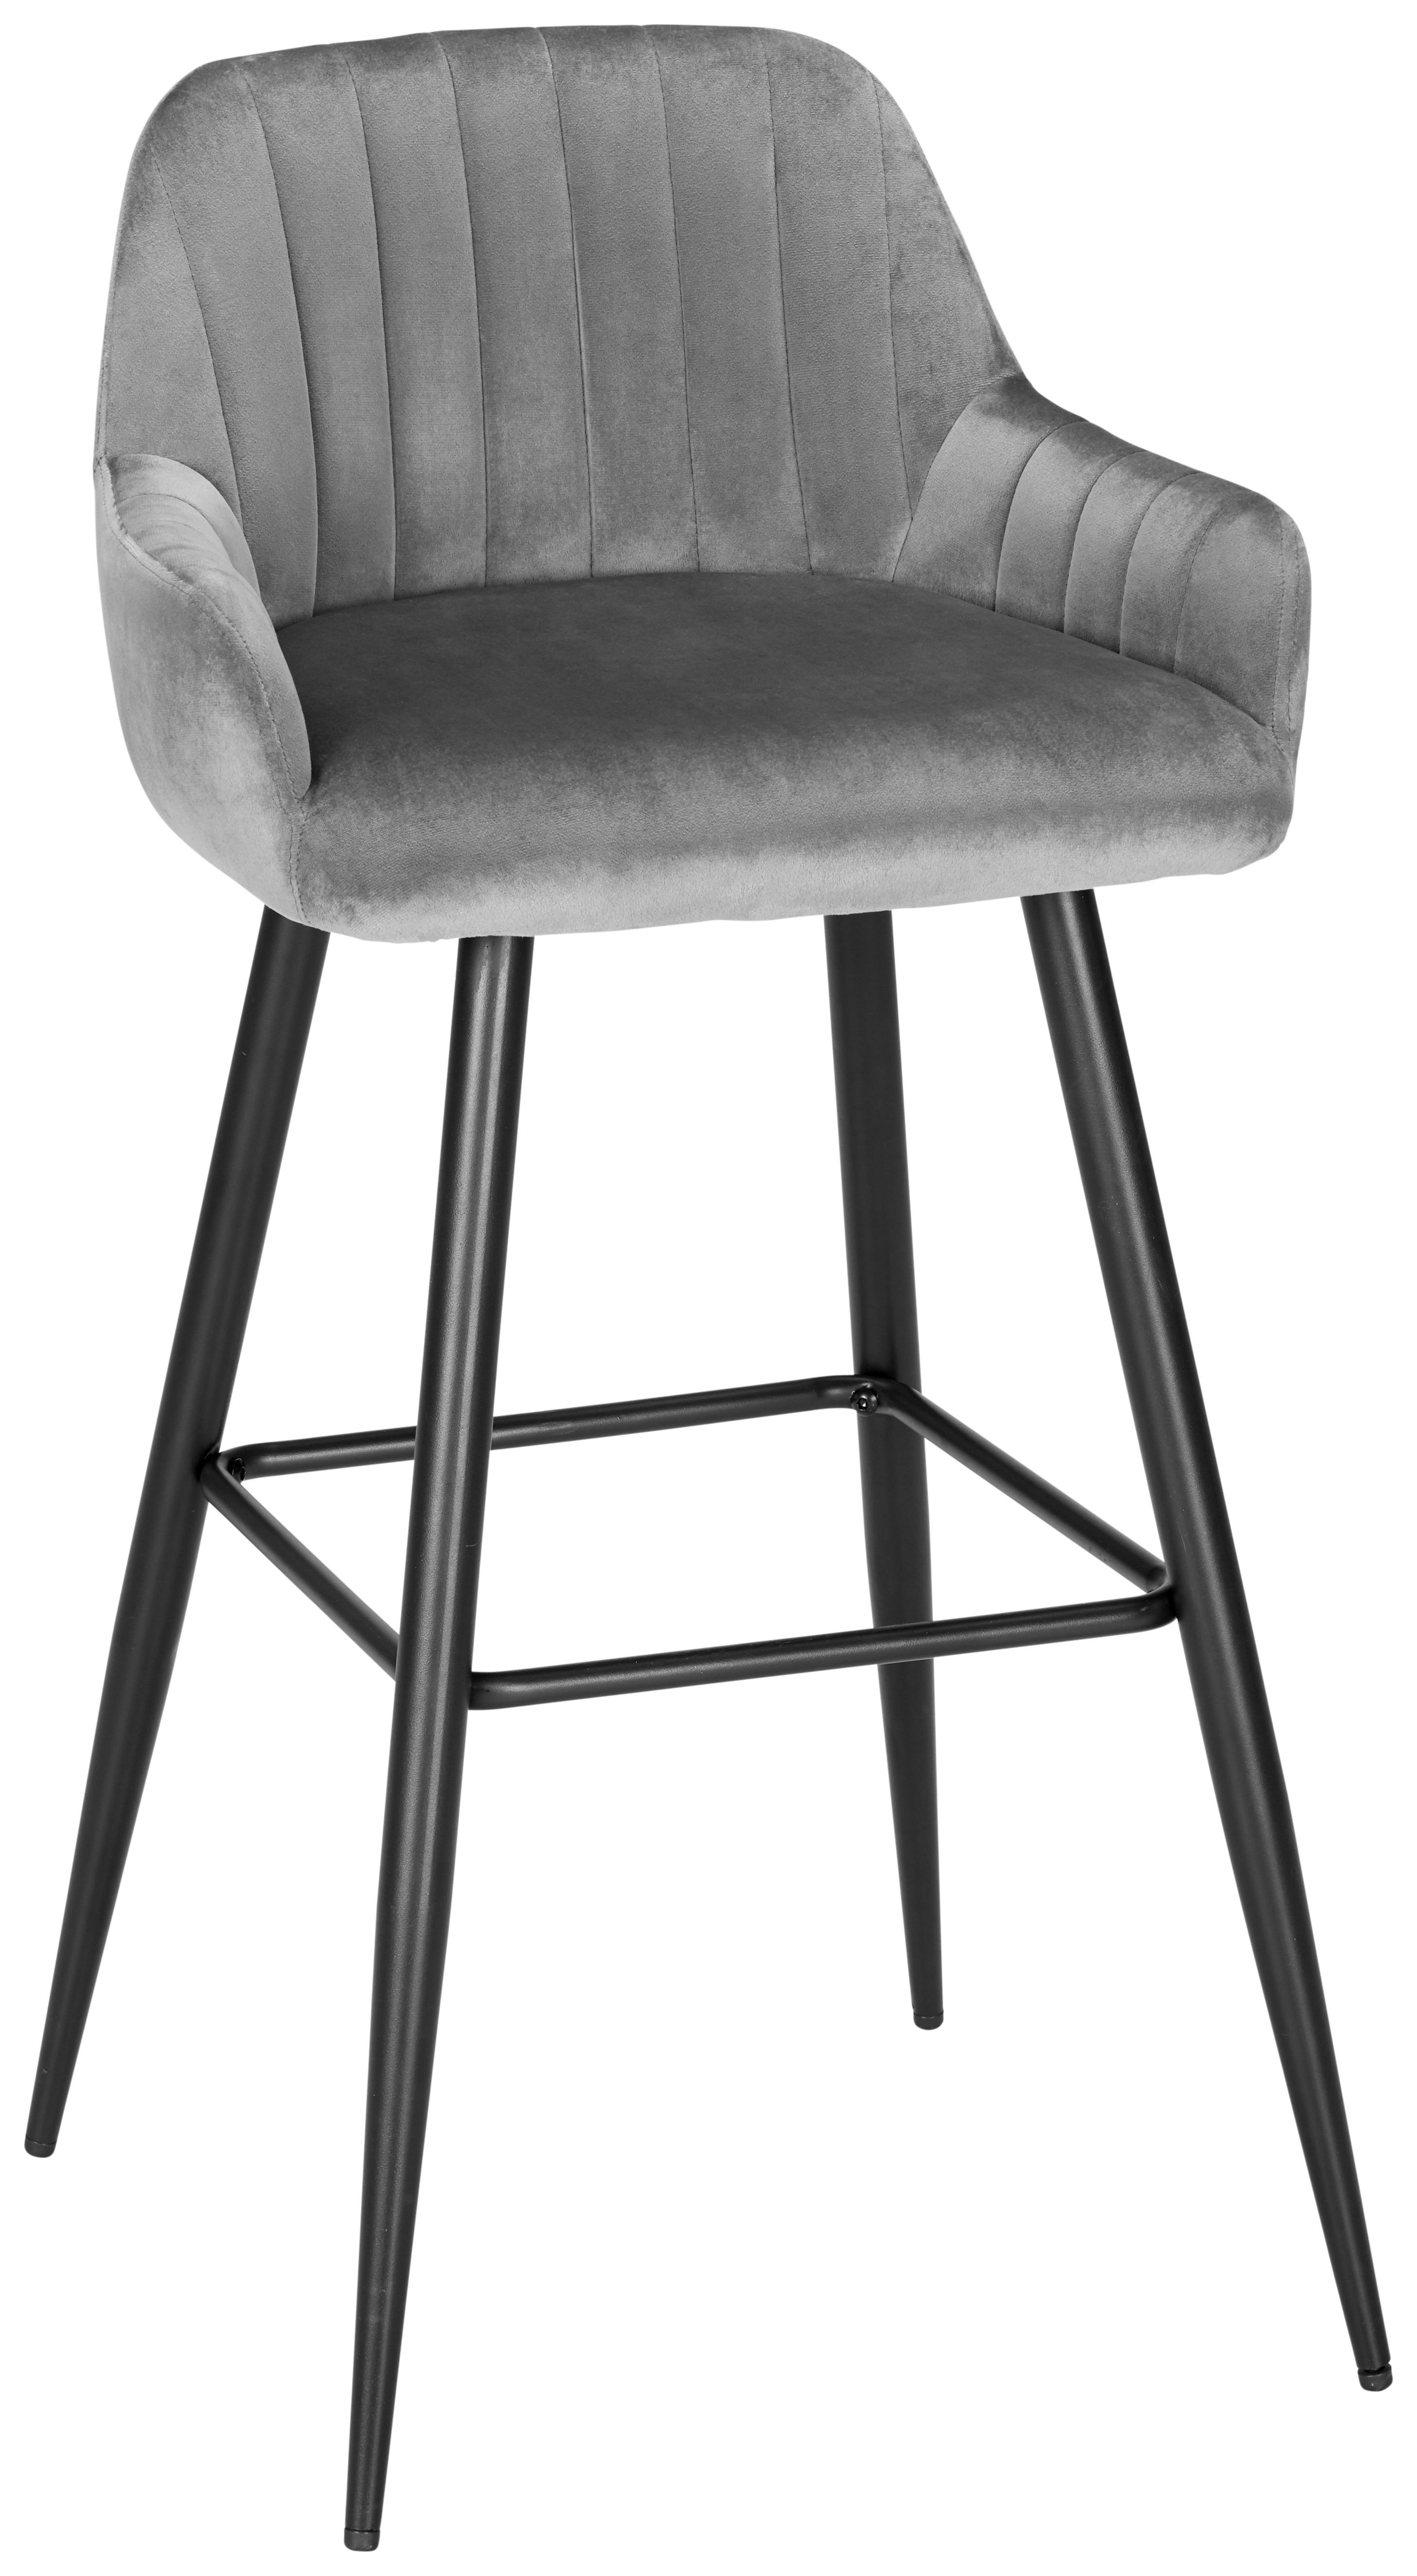 Barová Židle Martha - šedá/černá, Moderní, kov/textil (50/99/53,5cm) - Modern Living